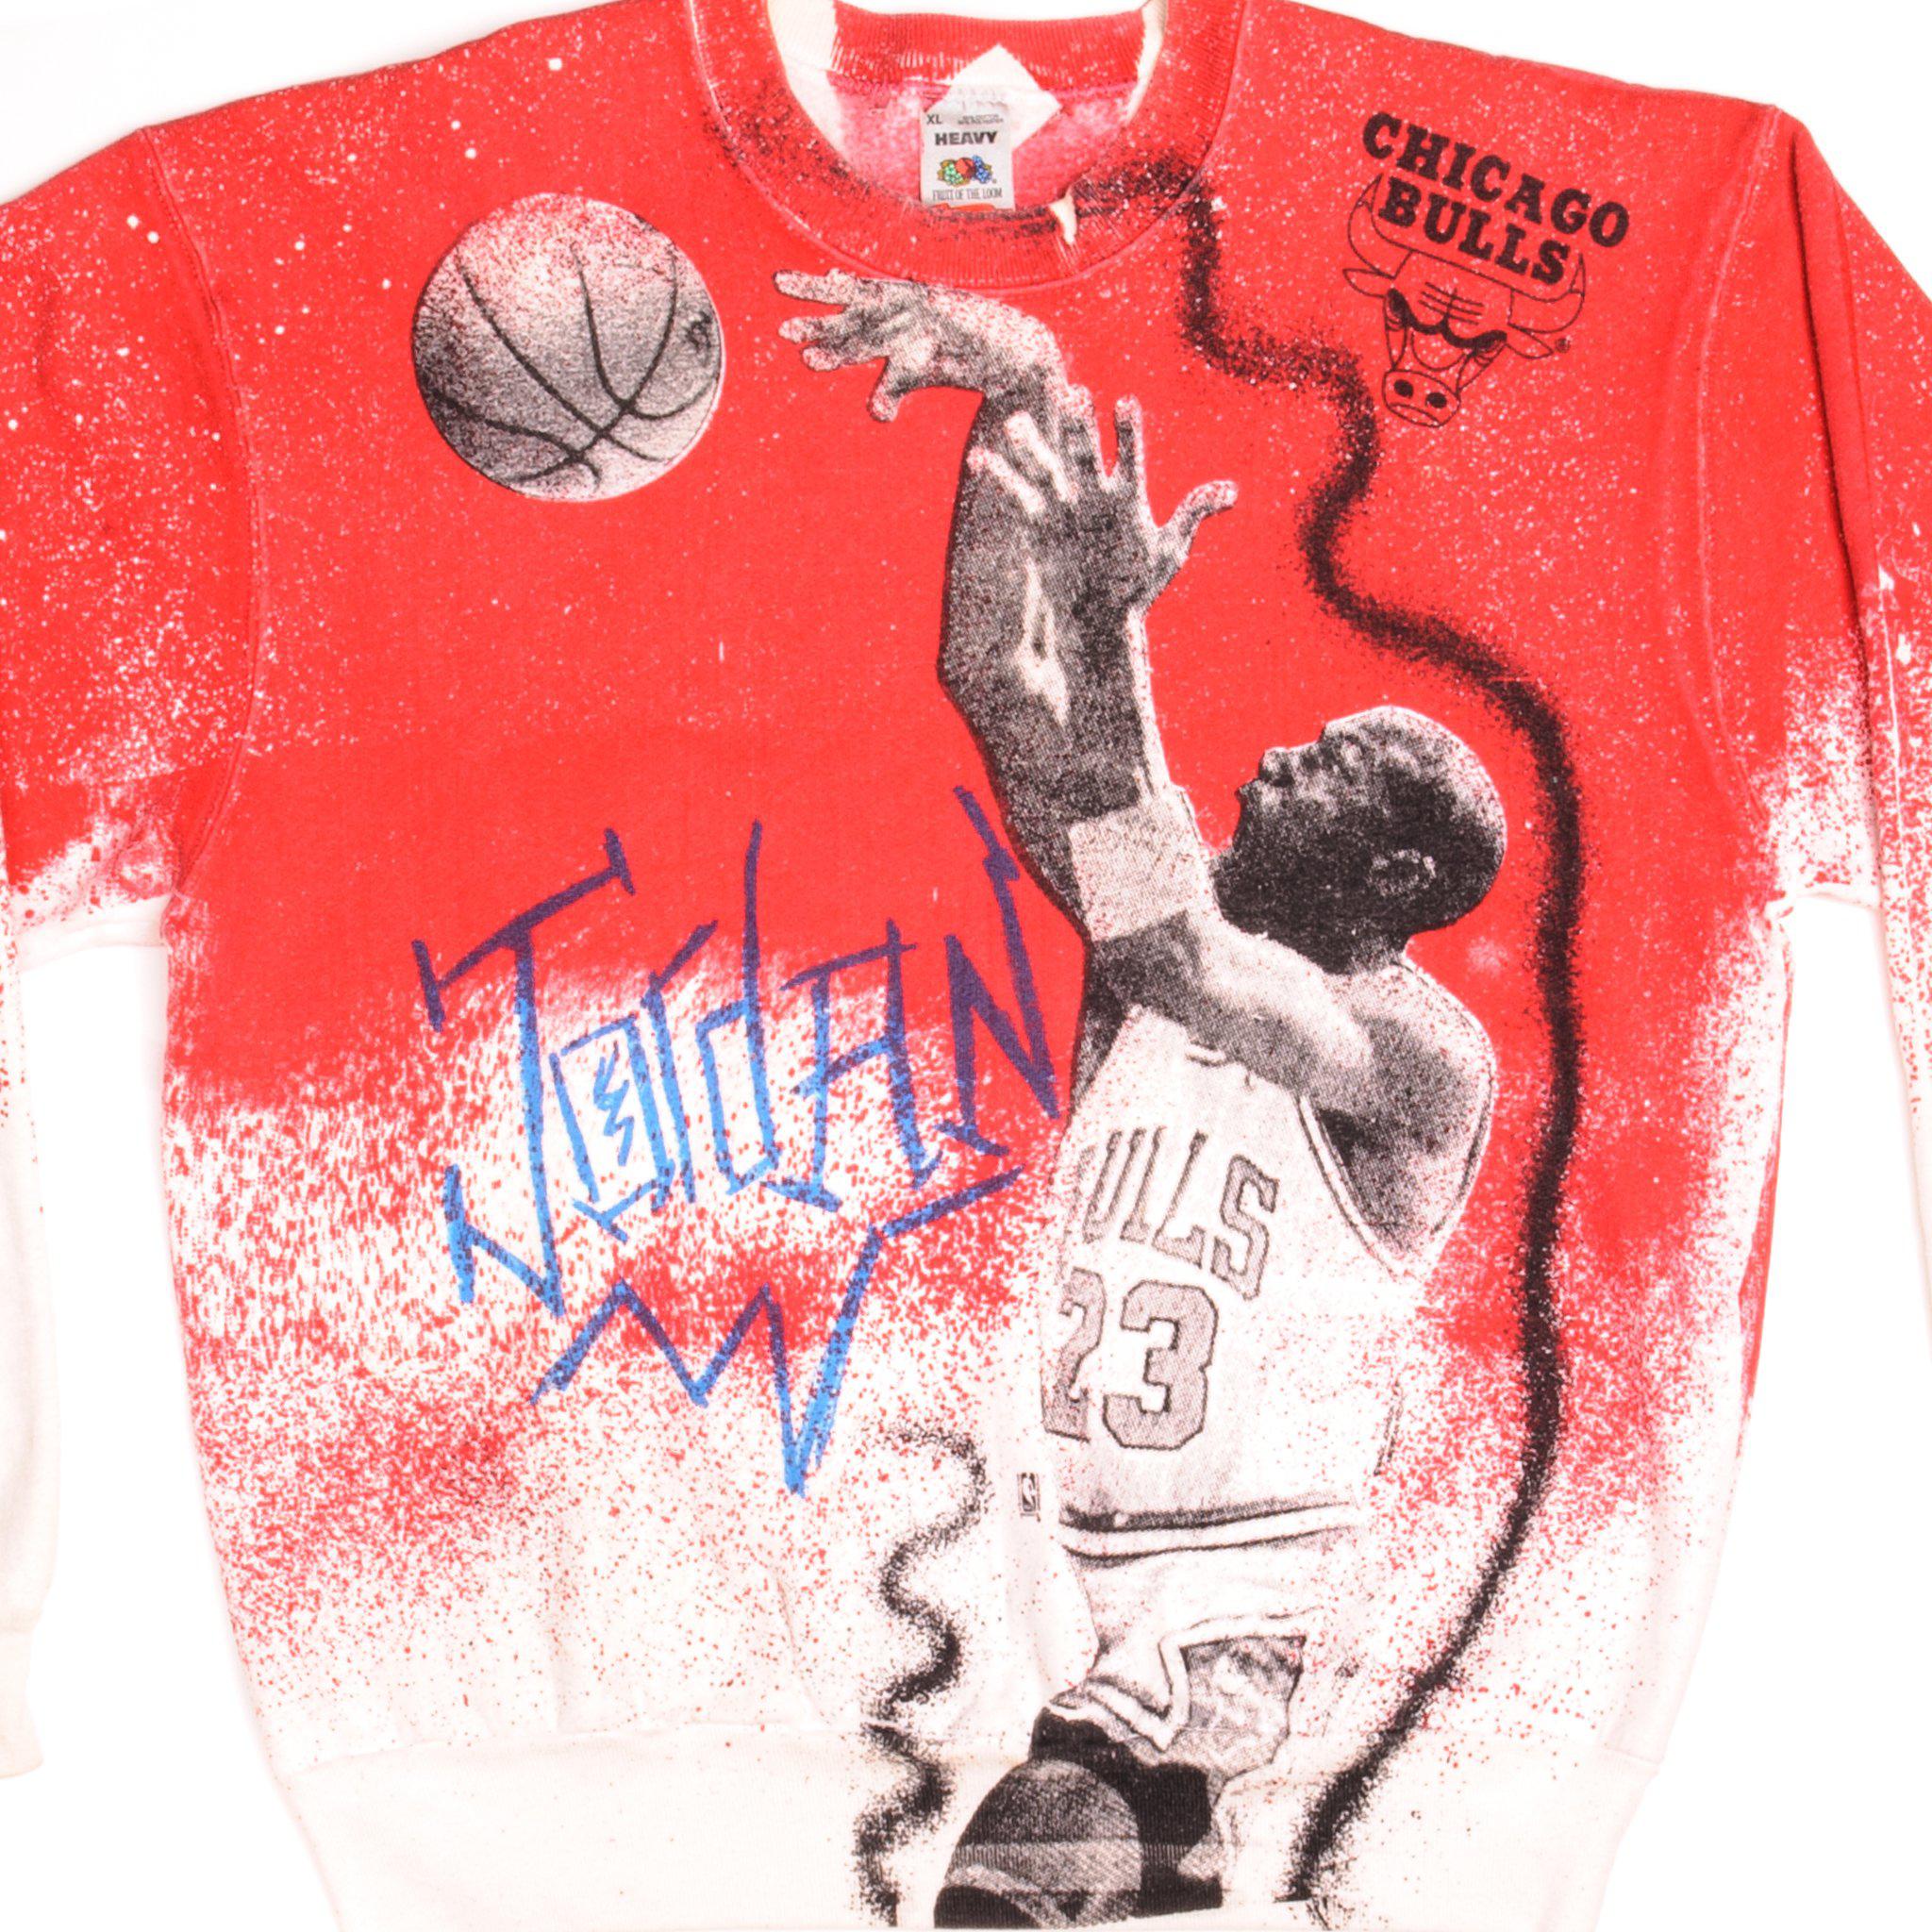 Vintage Tie Dye NBA Chicago Bulls Michael Jordan Tee Shirt Size 1990s